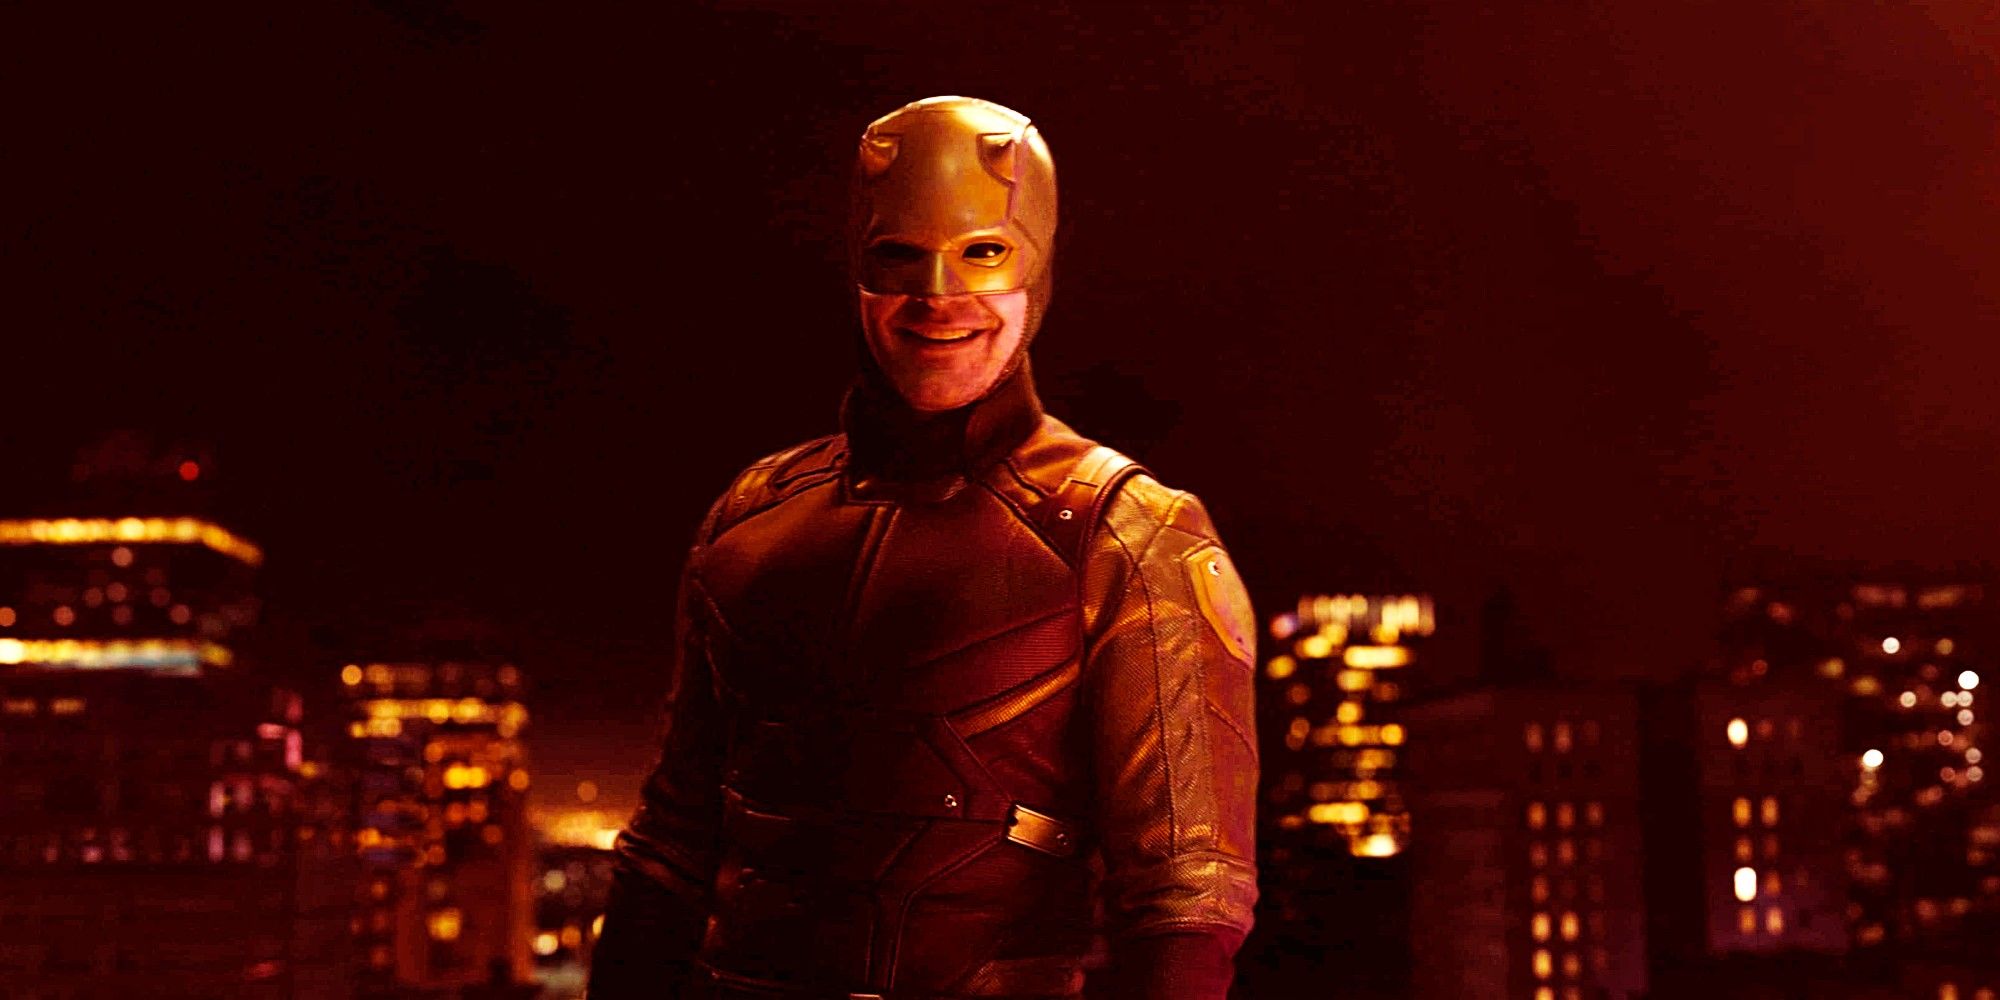 Charlie Cox as Matt Murdock Smiling In Full Daredevil Costume In She-Hulk Episode 8